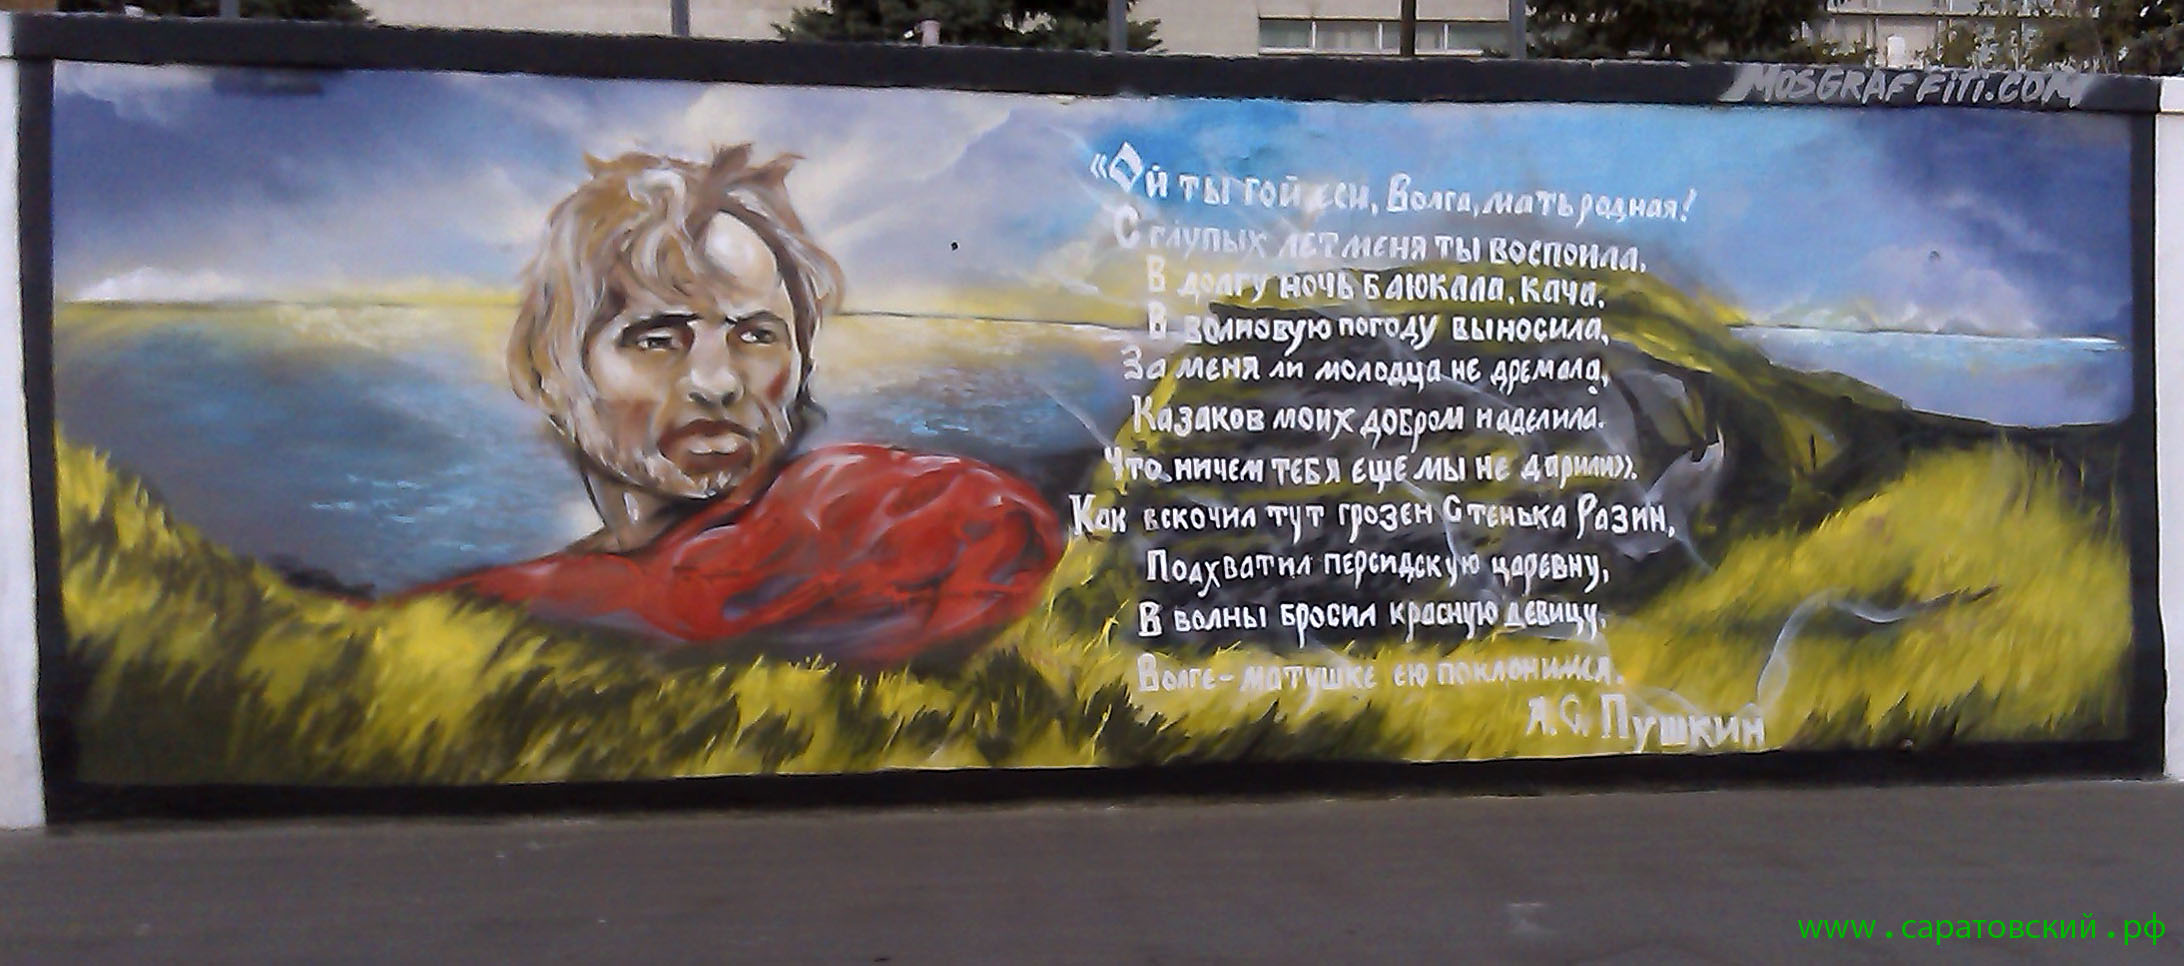 Saratov embankment graffiti: Stepan Razin and Saratov, Russia